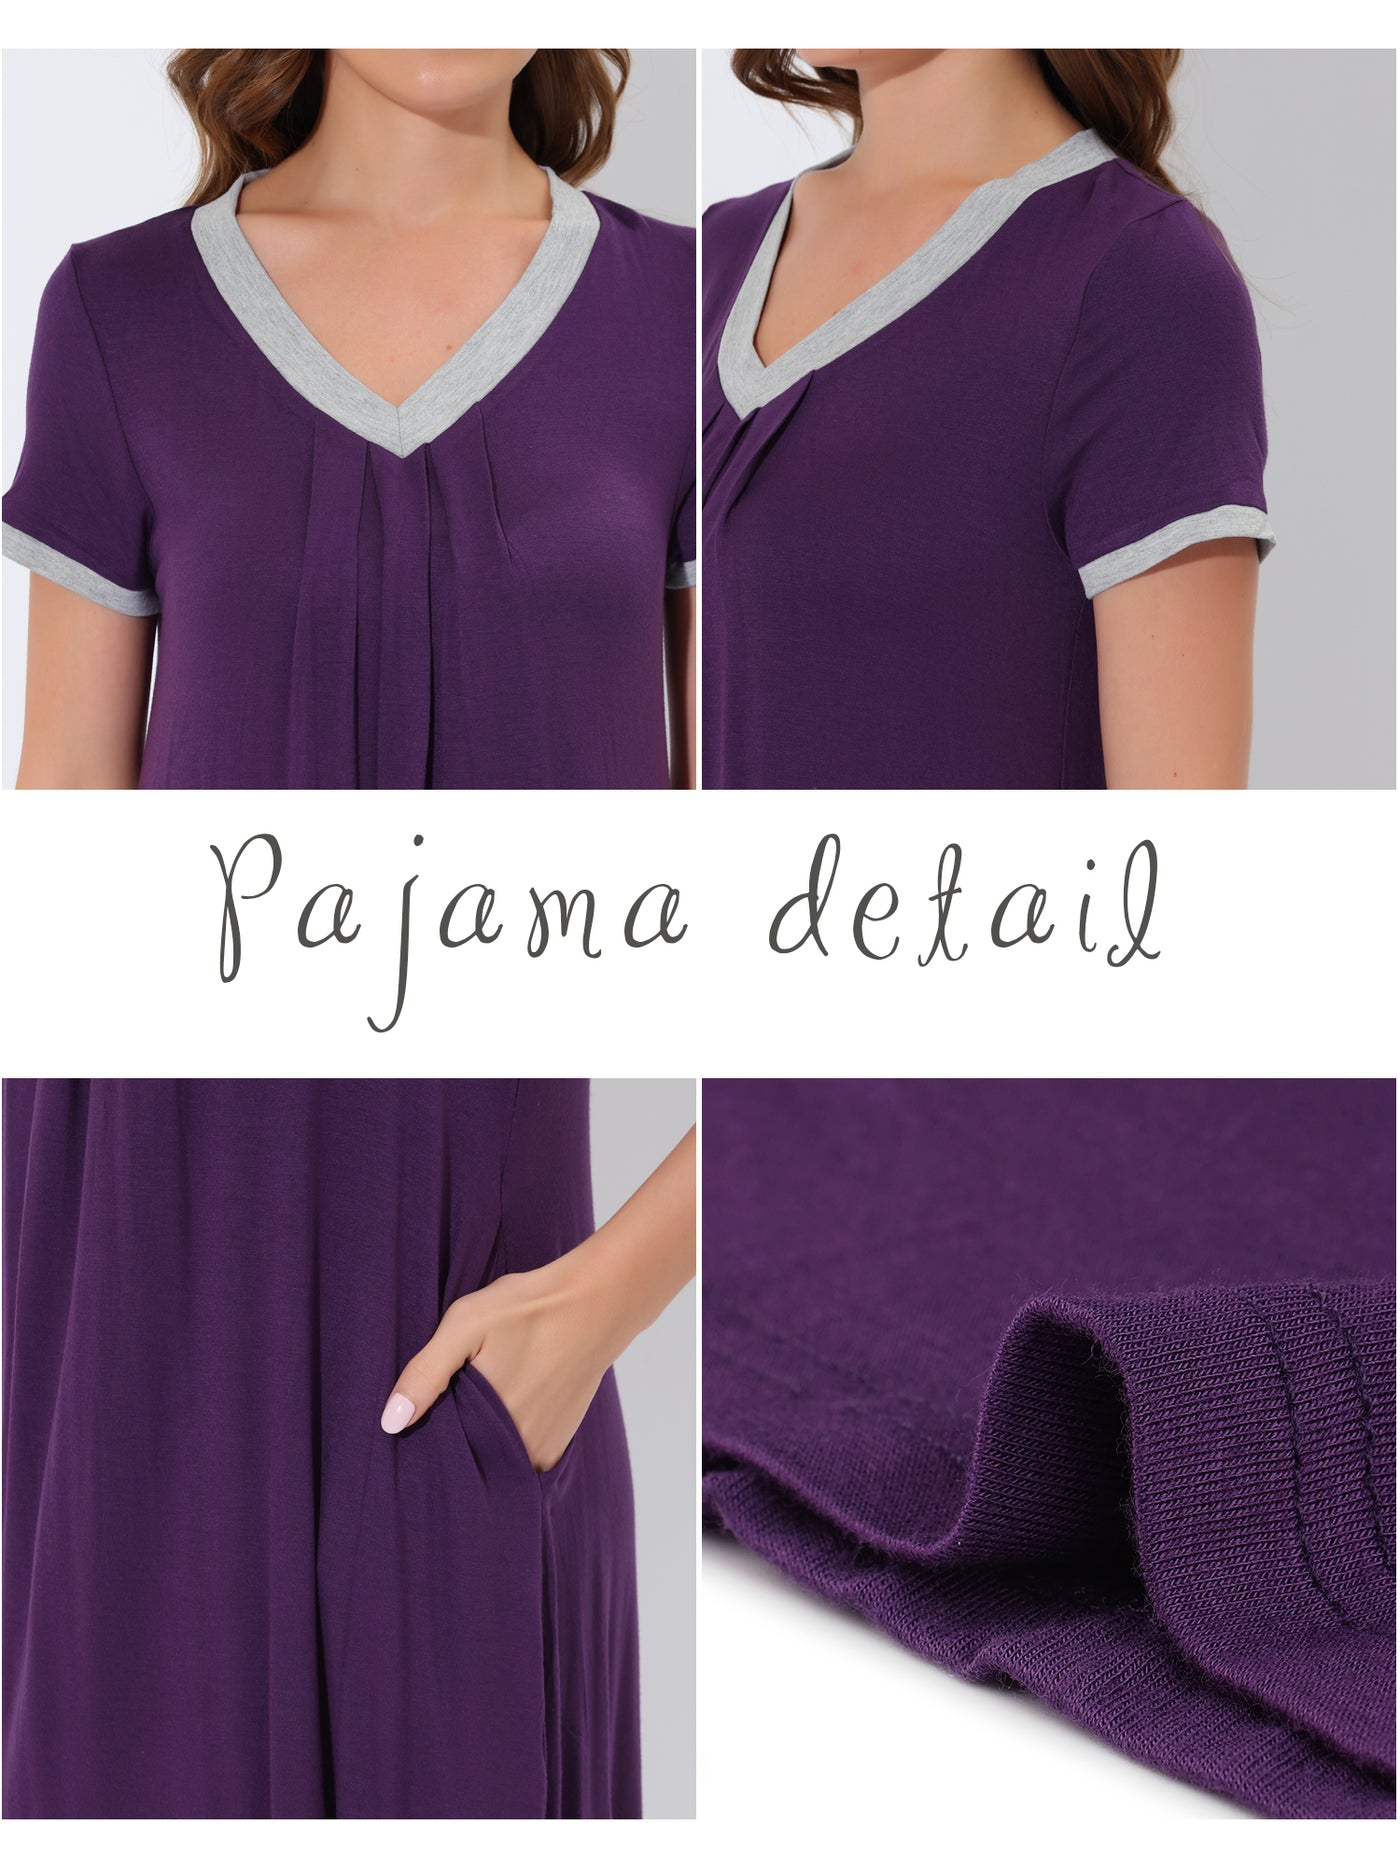 Bublédon Women's Pajama Dress Nightshirt Sleepwear V-Neck with Pockets Lounge Nightgown